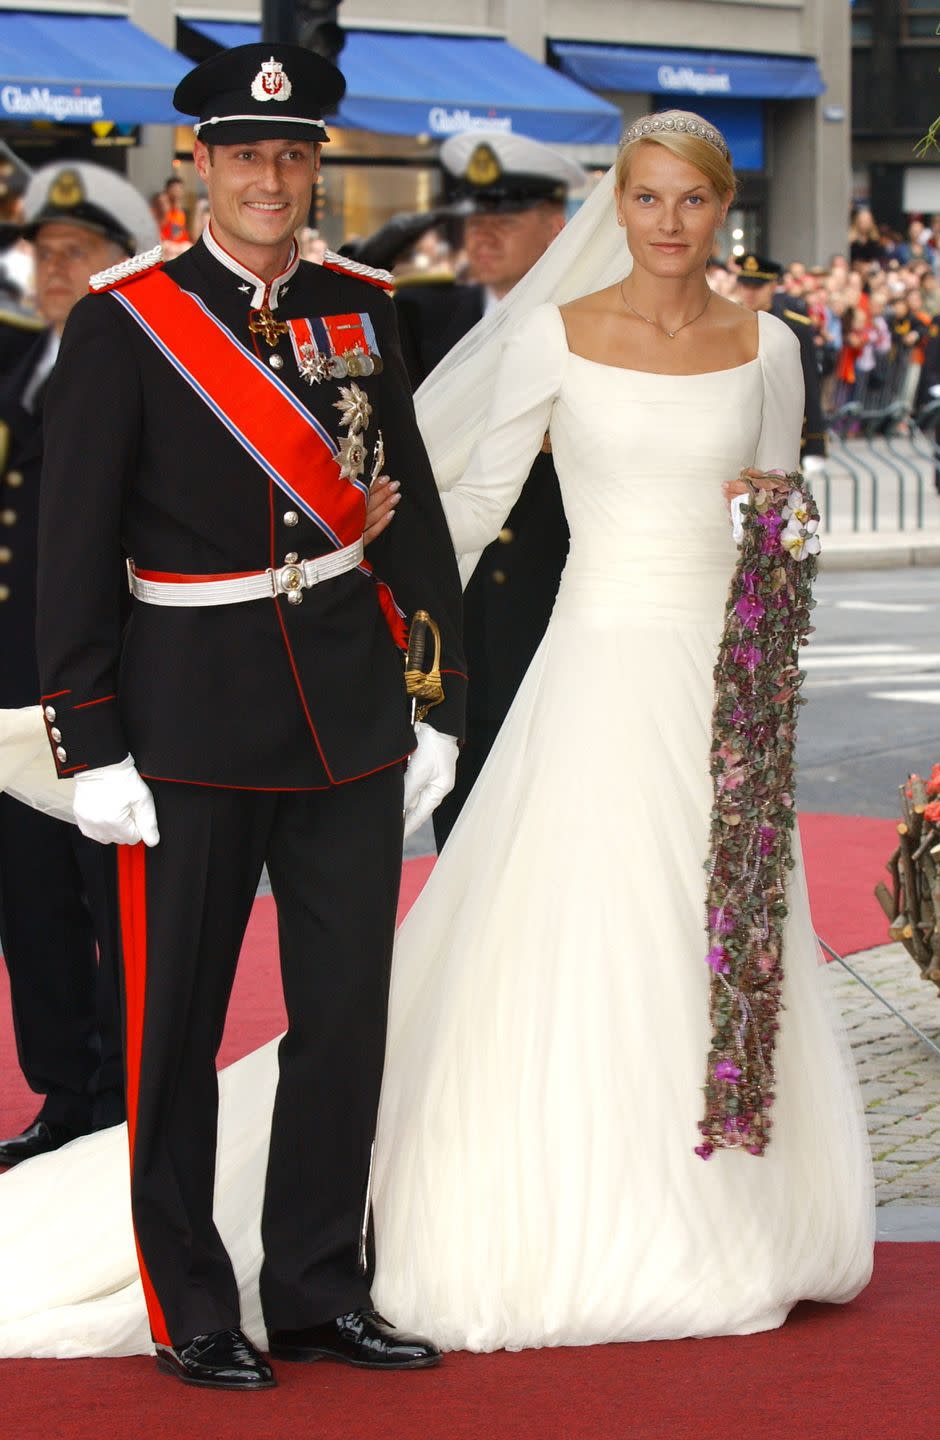 Prince Haakon of Norway and Princess Mette-Marit